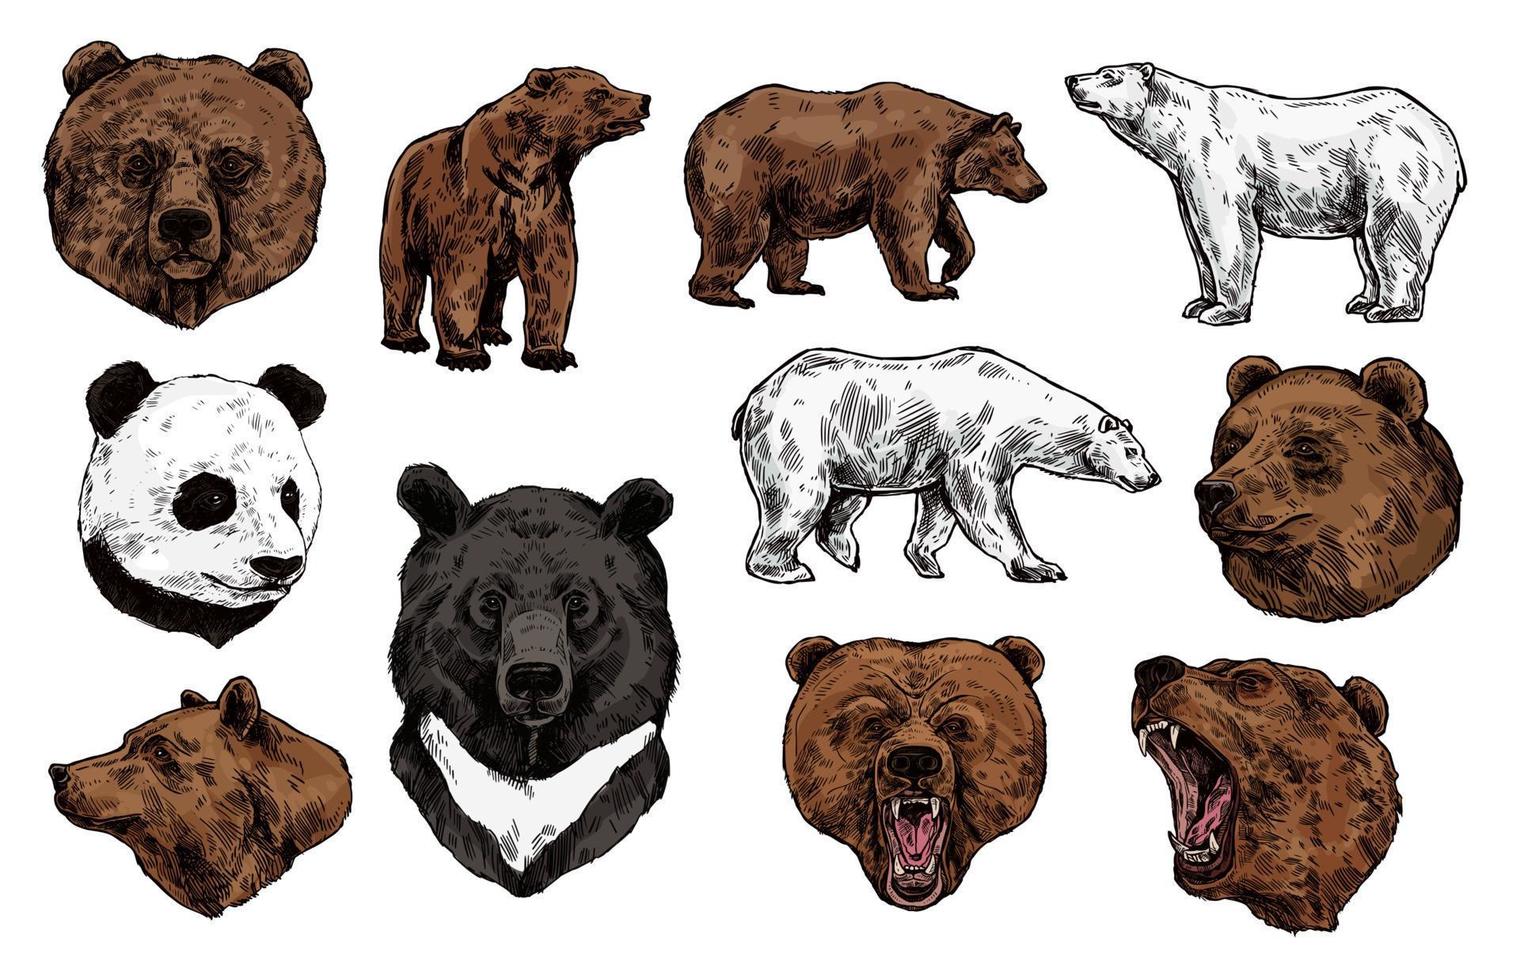 Polar, brown bear, grizzly and panda sketch vector